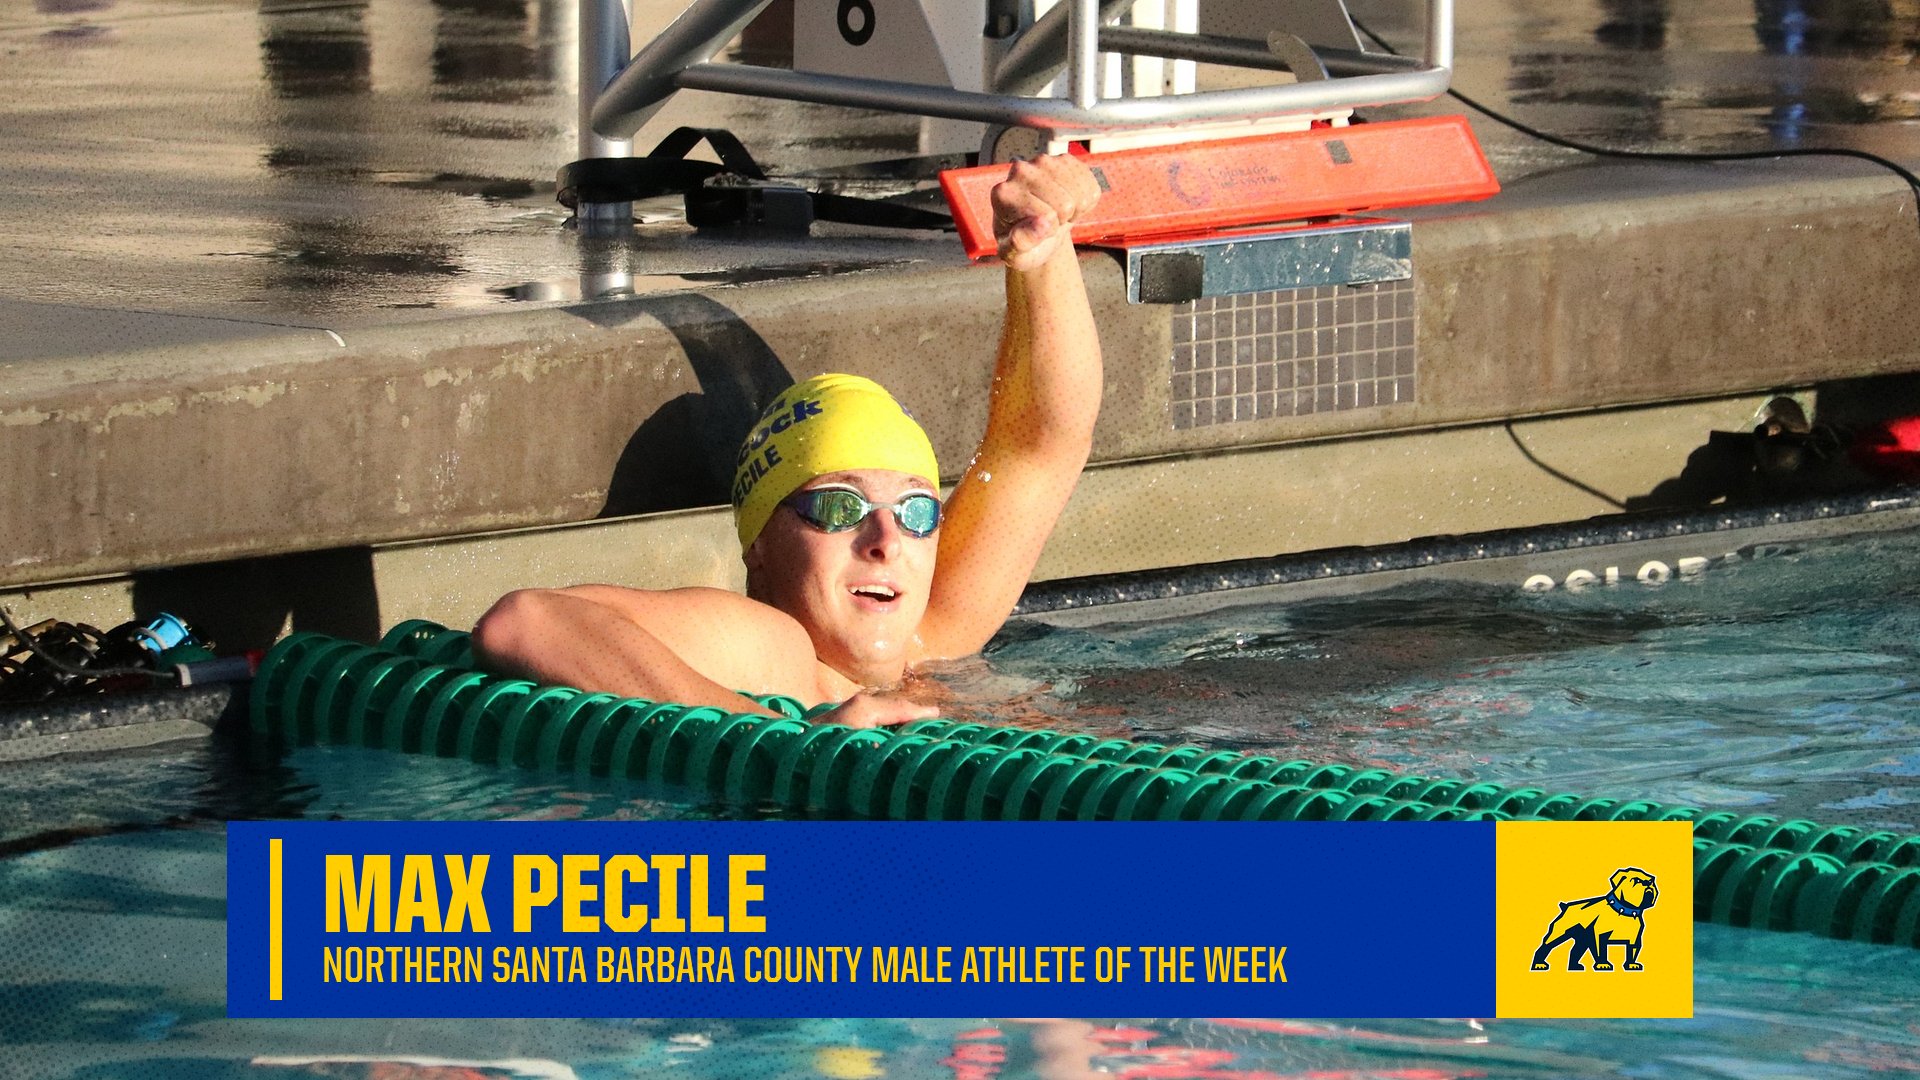 Pecile Tabbed as Northern Santa Barbara County Male Athlete of the Week